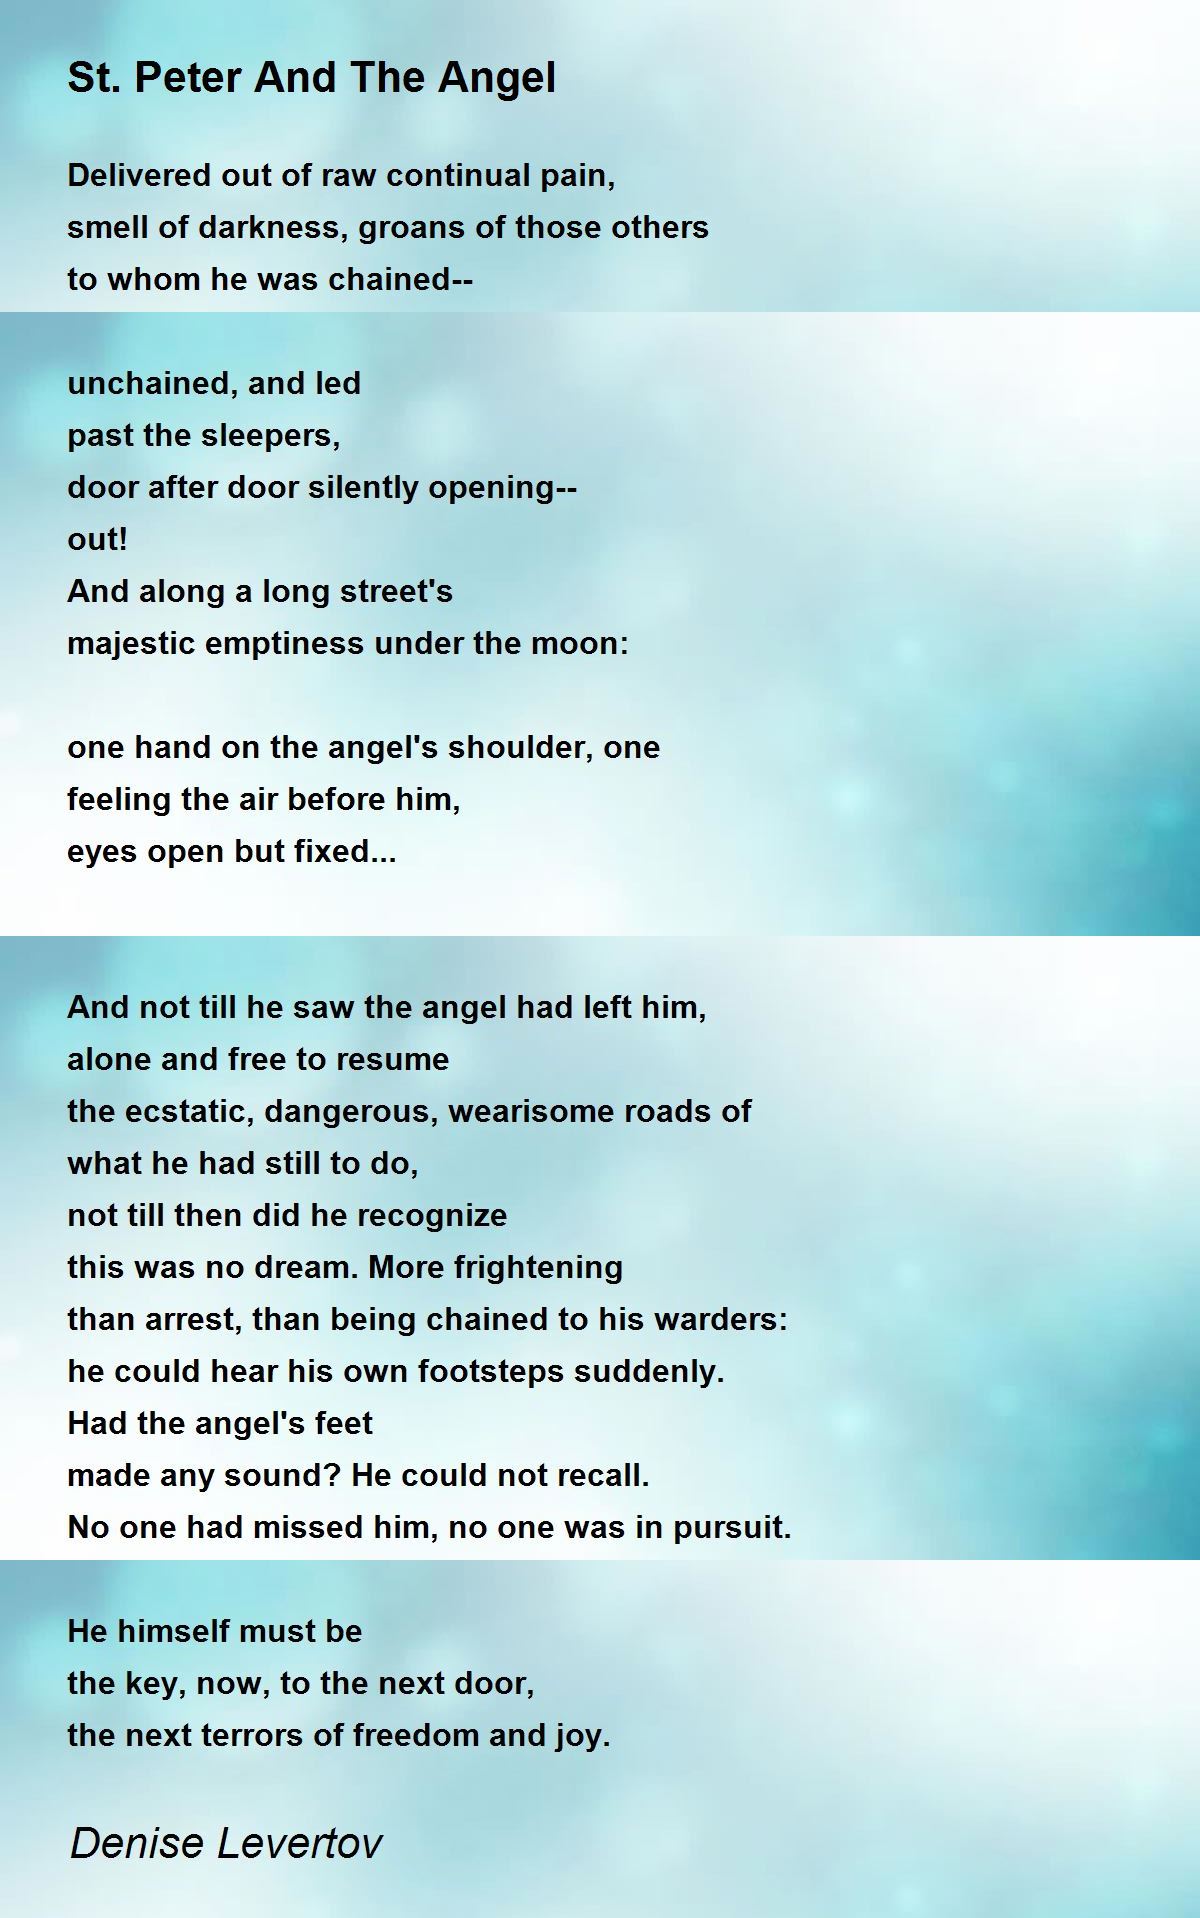 St. Peter And The Angel Poem by Denise Levertov - Poem Hunter